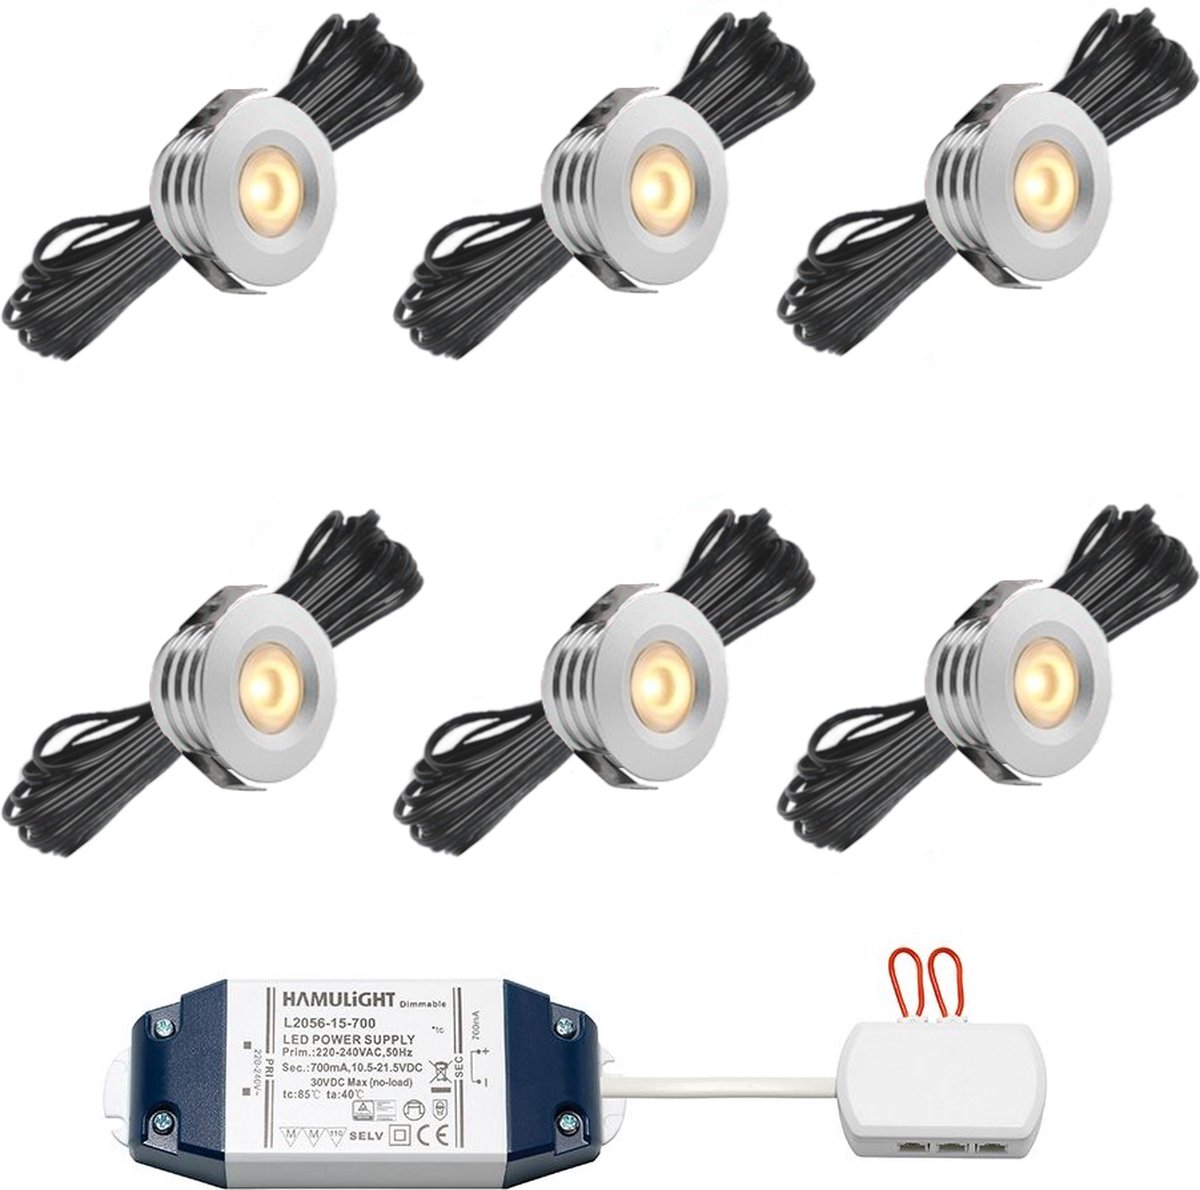 LED inbouwspot Pals bas inclusief trafo - inbouwspots / downlights / plafondspots / led spot / 3W / dimbaar / warm wit / rond / 230V / IP44 / - set van 6 stuks